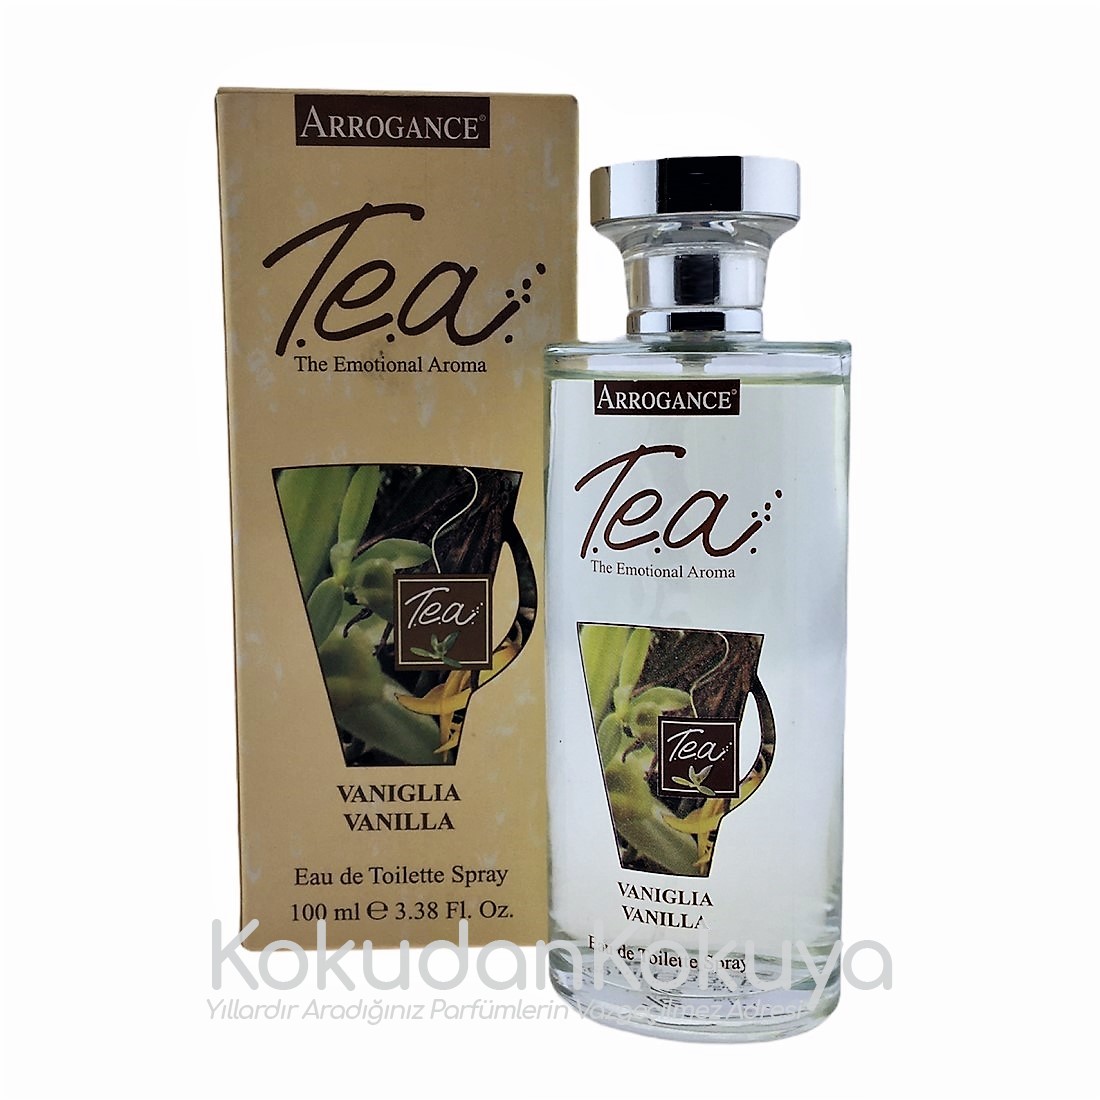 SCHIAPPARELLI PIKENZ Kadın Arrogance T.e.a Vanilla Perfume (Vintage)